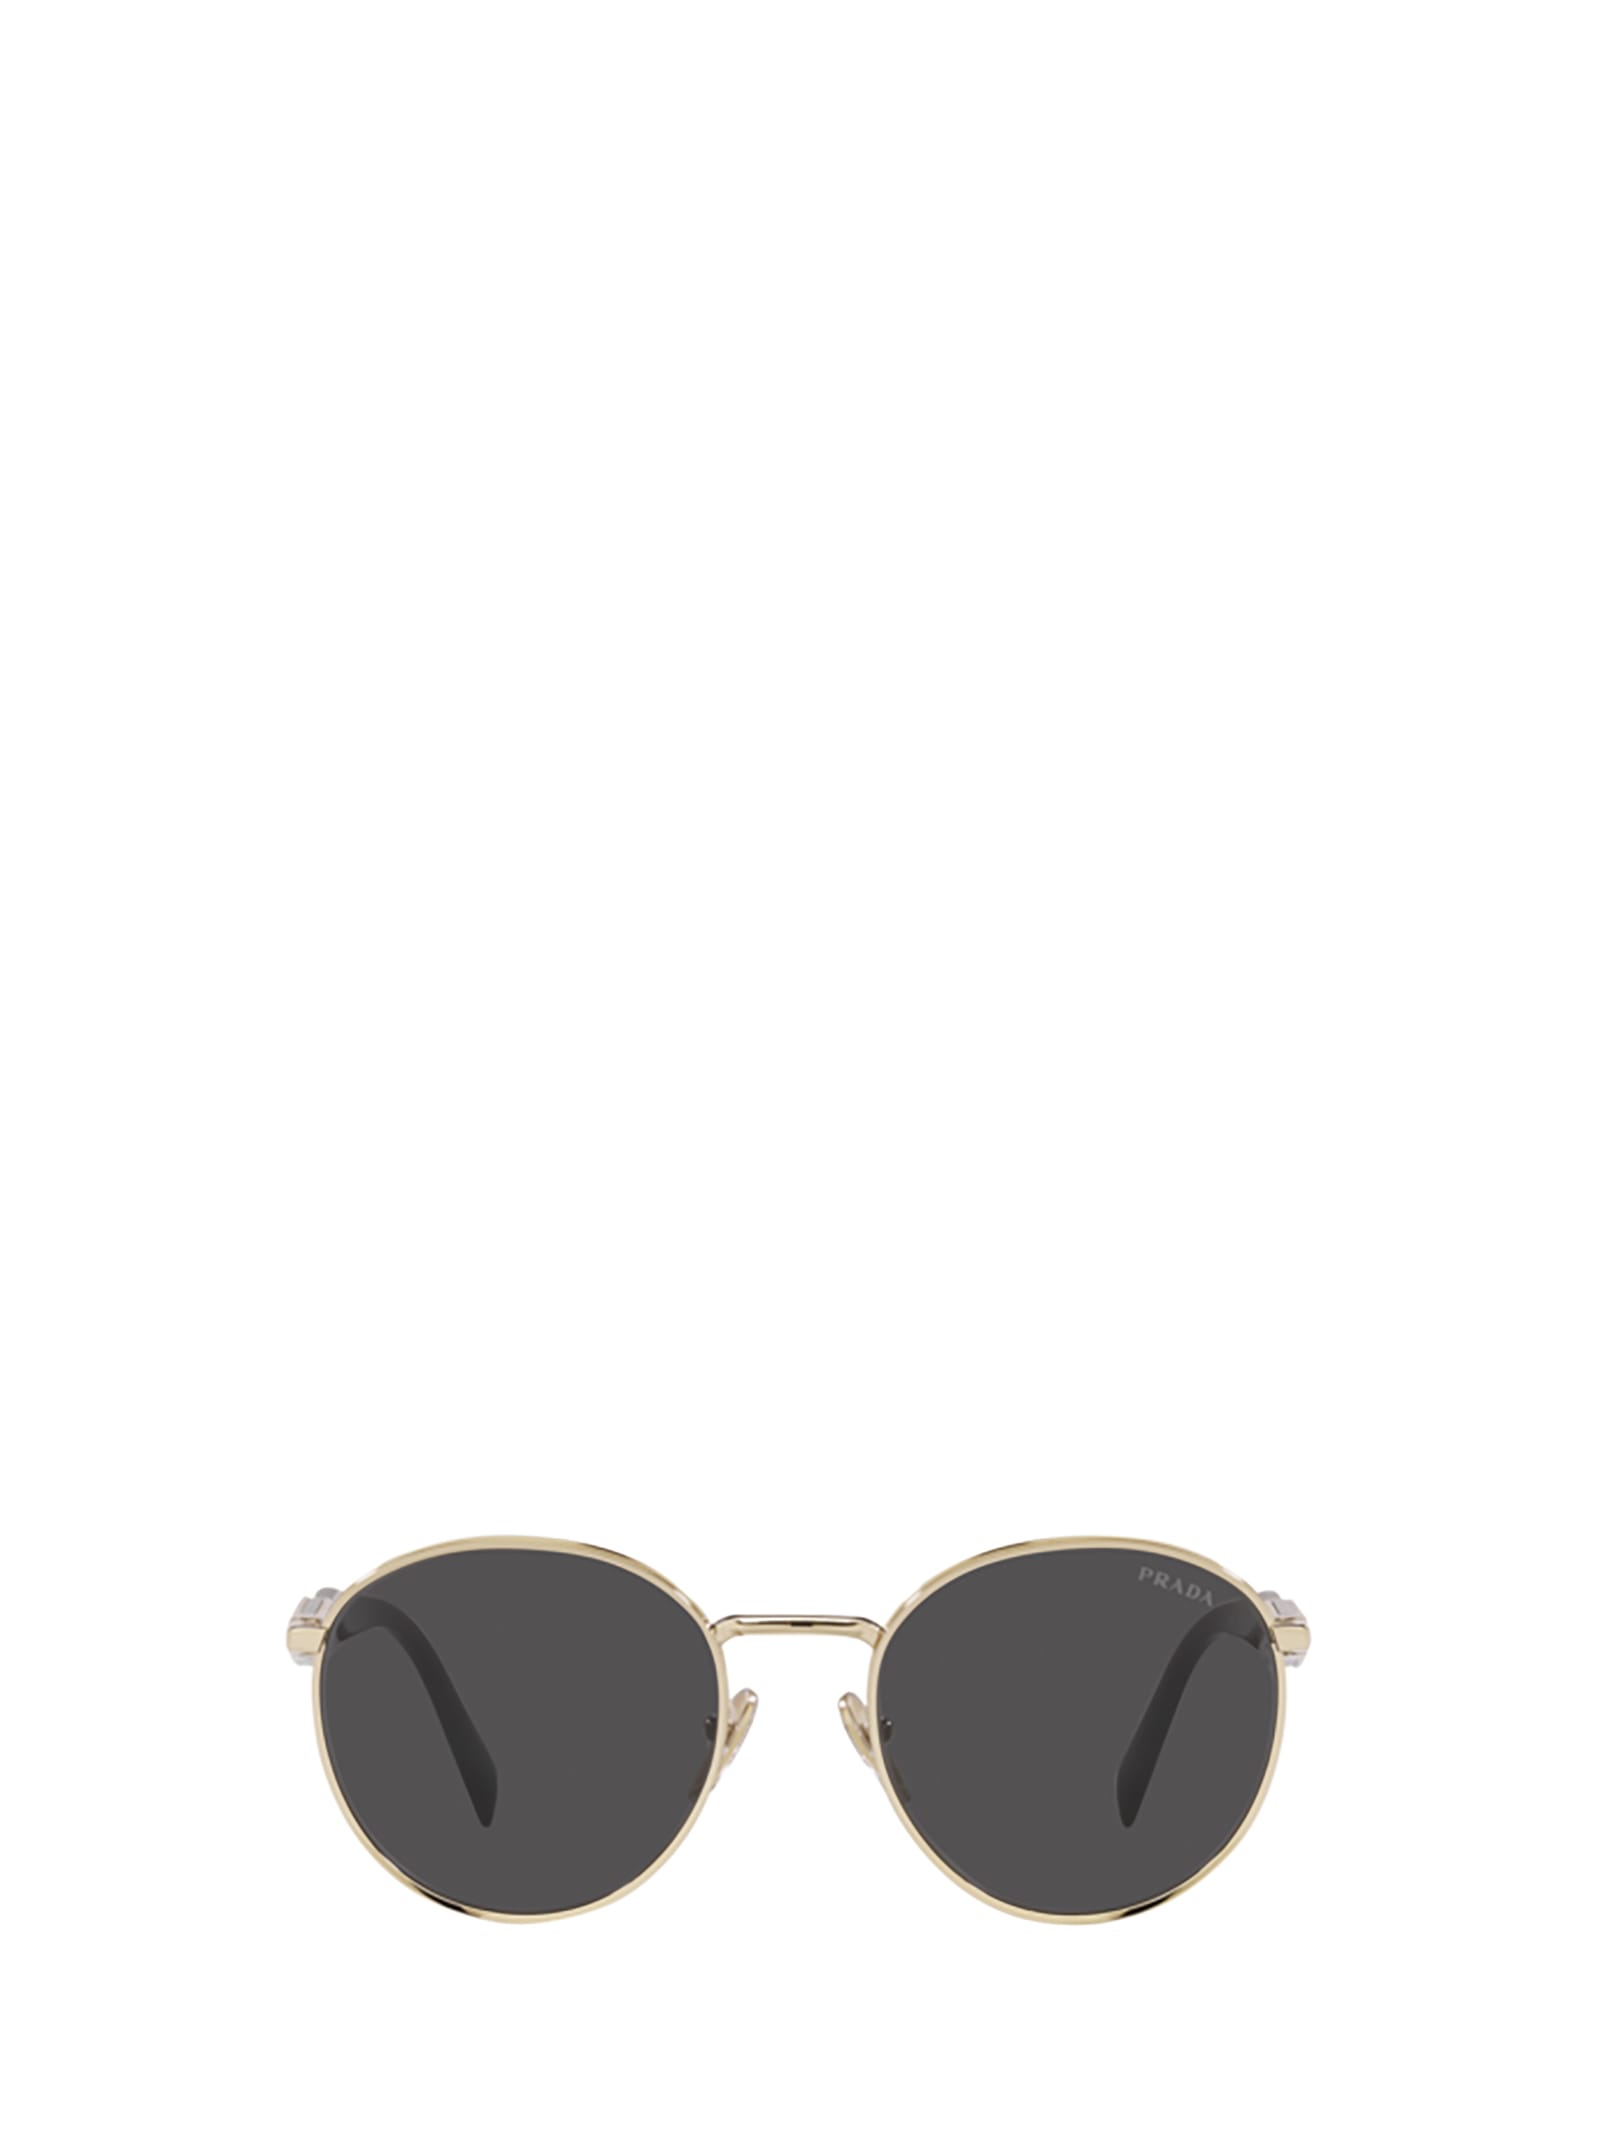 Prada Pr 56zs Pale Gold Sunglasses